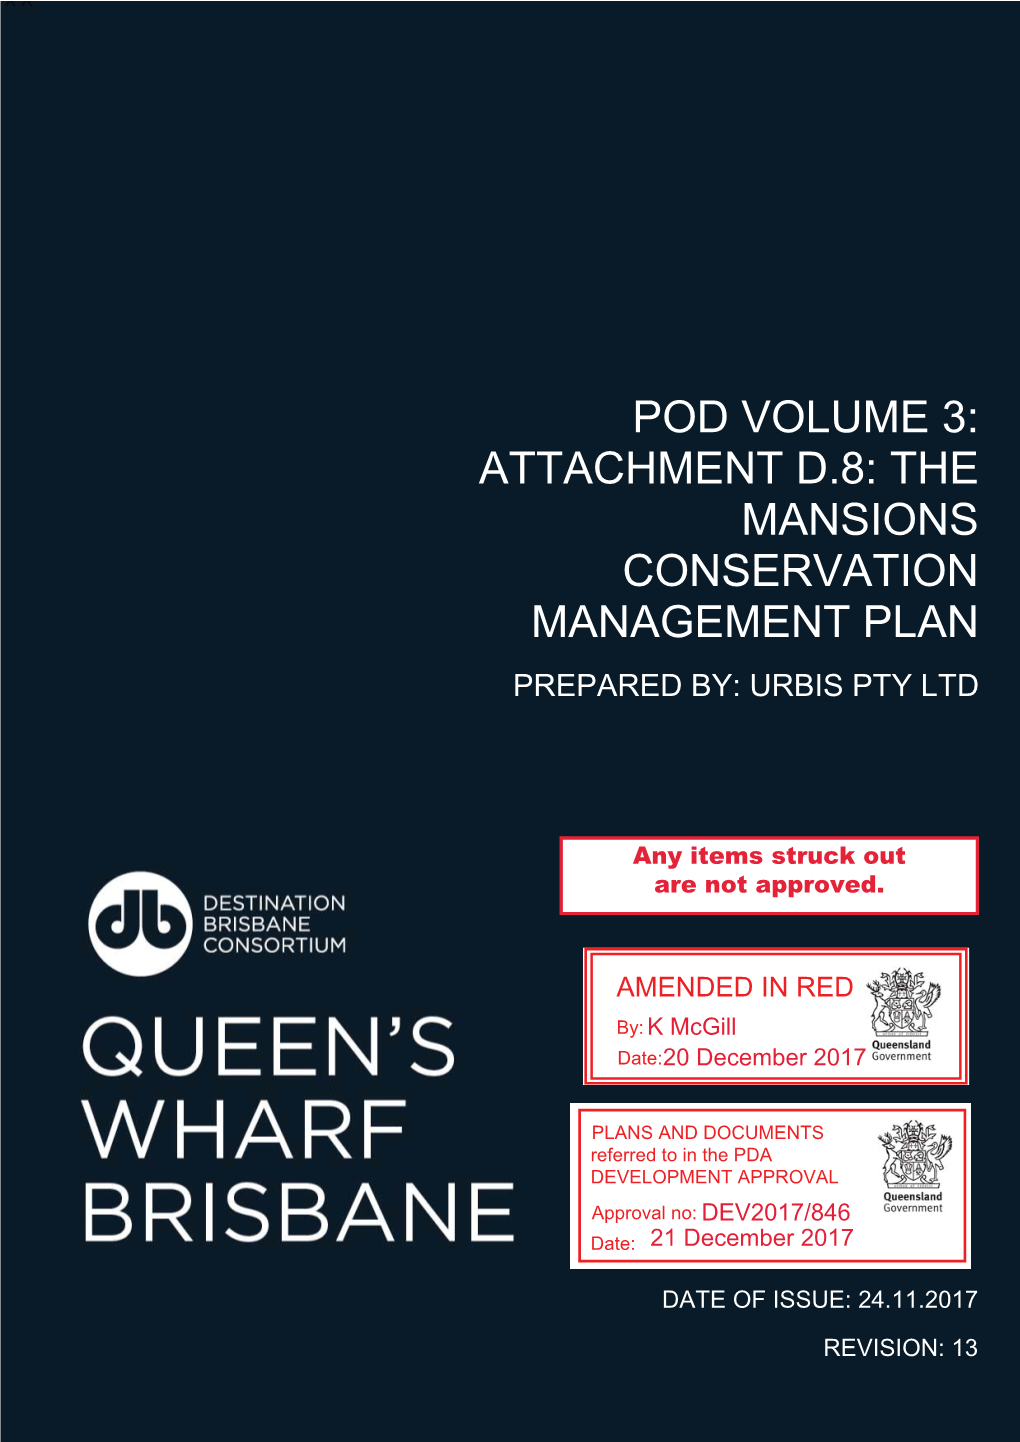 Attachment D.8: the Mansions Conservation Management Plan Prepared By: Urbis Pty Ltd